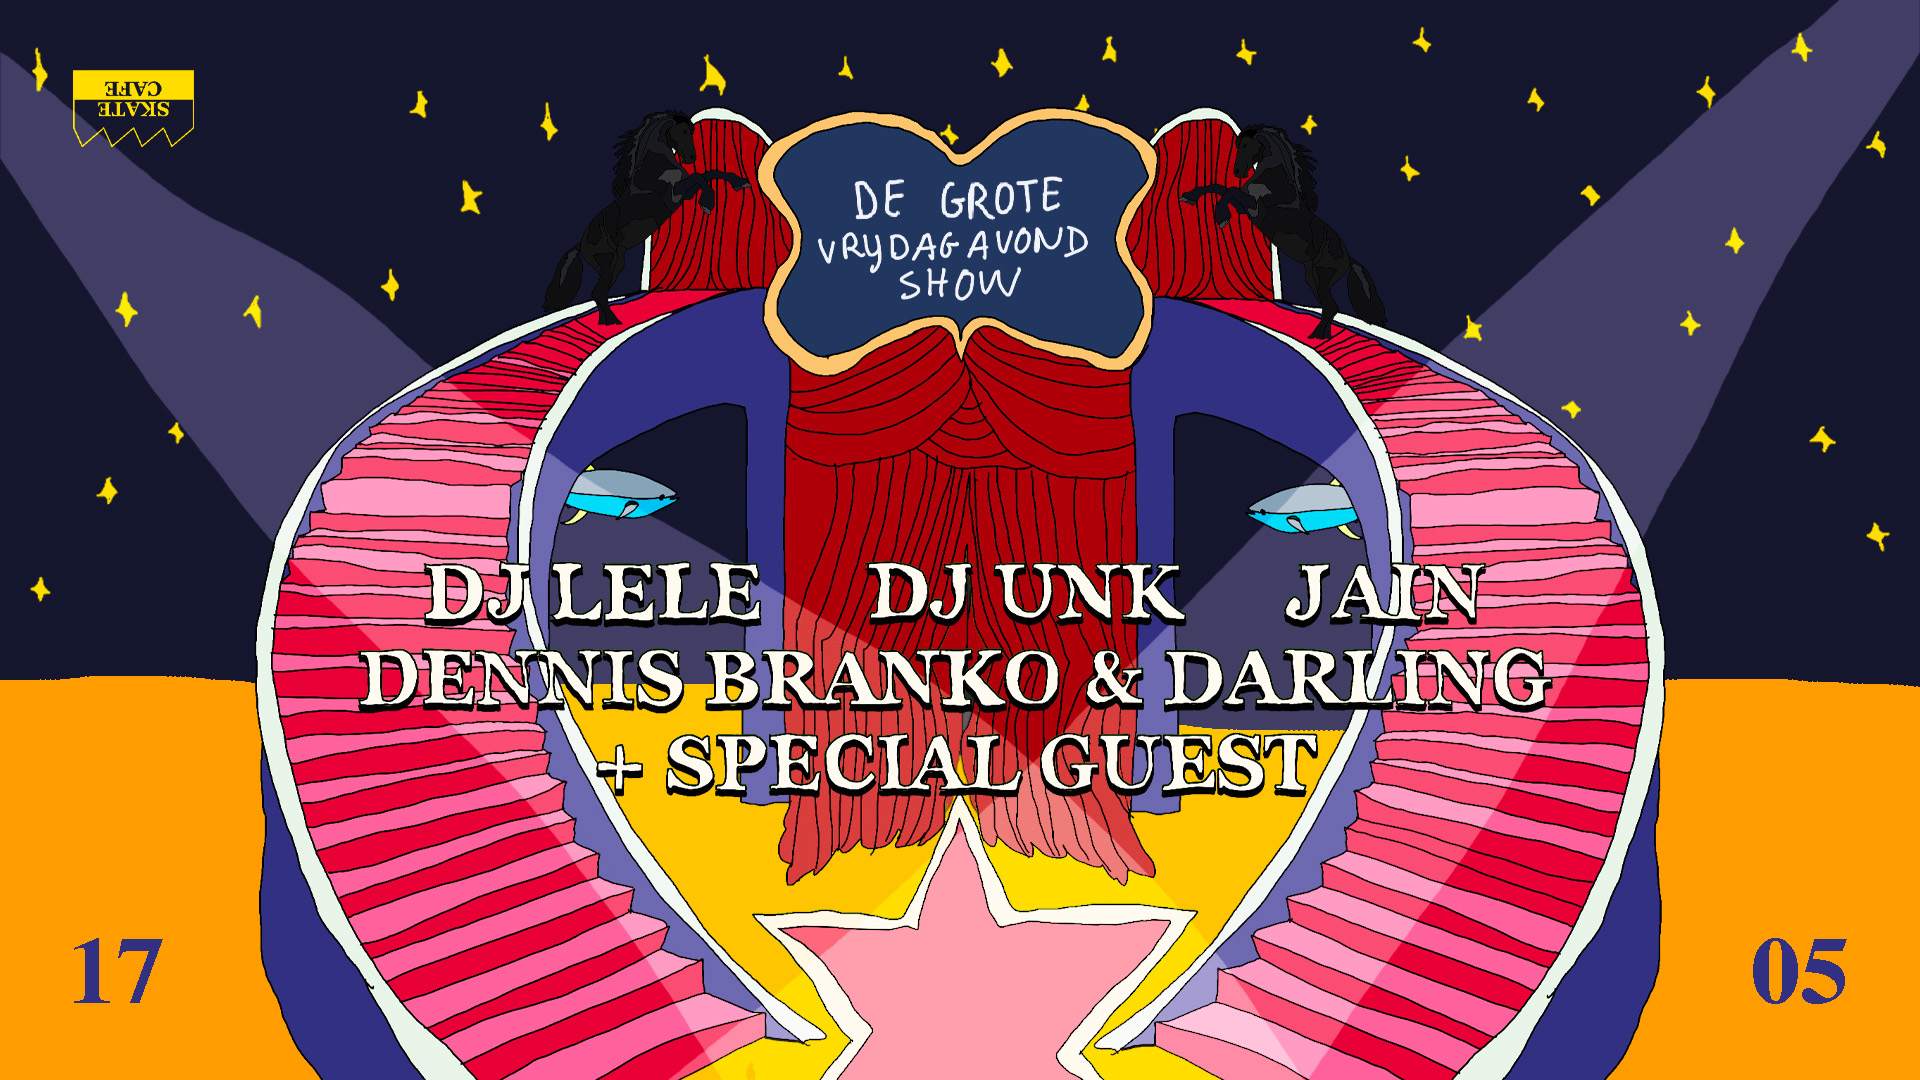 DE GROTE VRIJDAGAVONDSHOW: DJ LELE, DJ UNK, DARLING10, DENNIS BRANKO, MEGAN JANE & BJOLEY - Página frontal